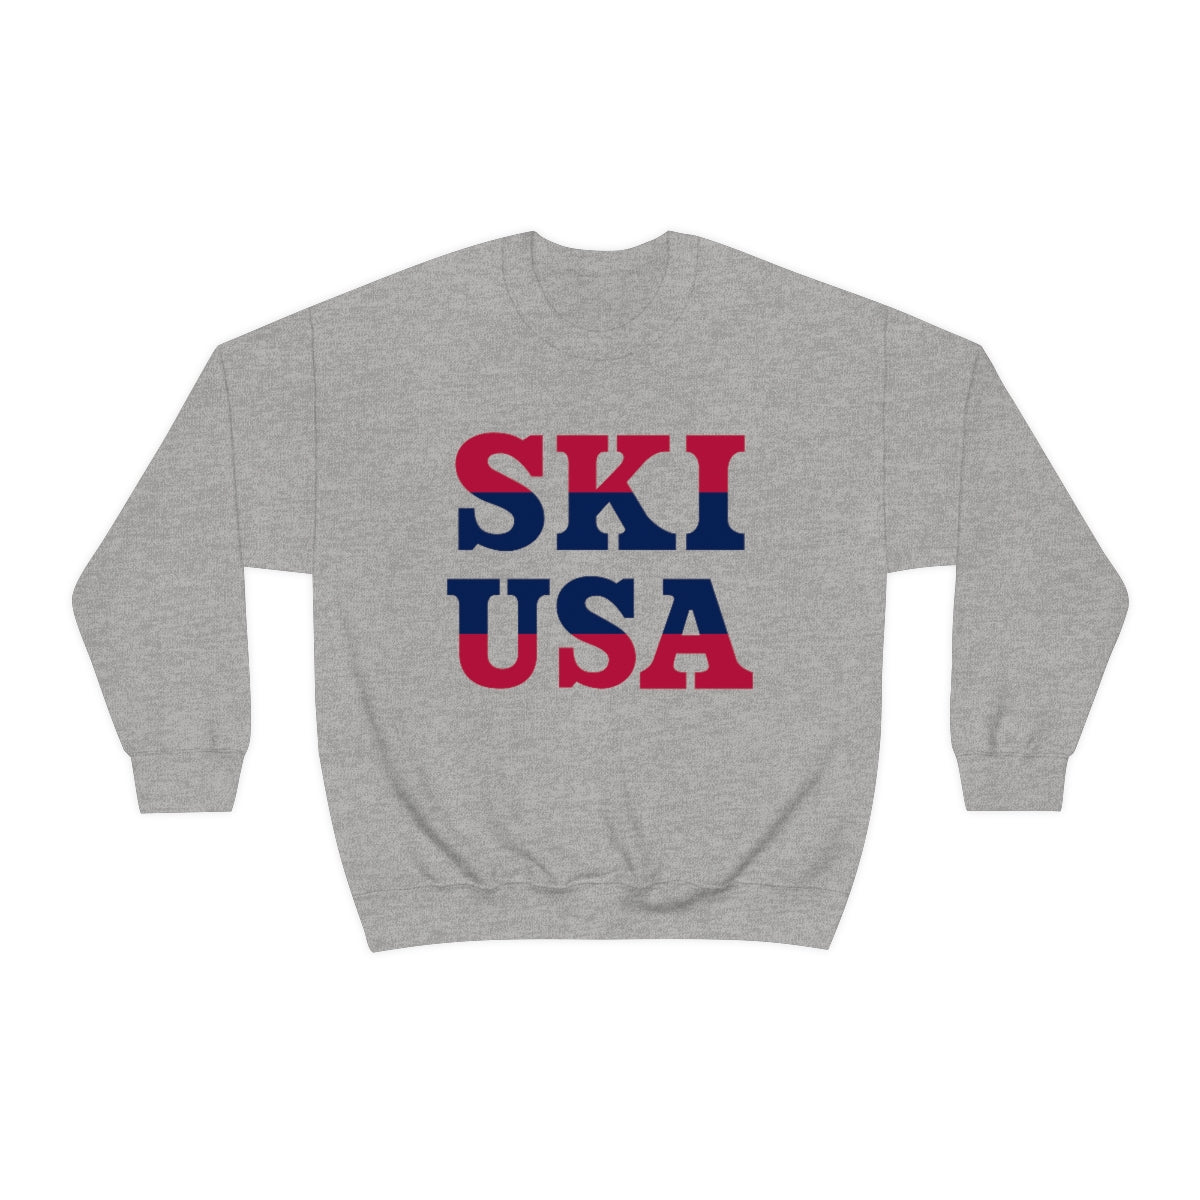 Ski USA Sweatshirt, Ski Sweatshirt, Après Ski Sweatshirt, Girls Weekend Sweatshirt, Ski Sweater, Ski Trip, Ski USA sweatshirt